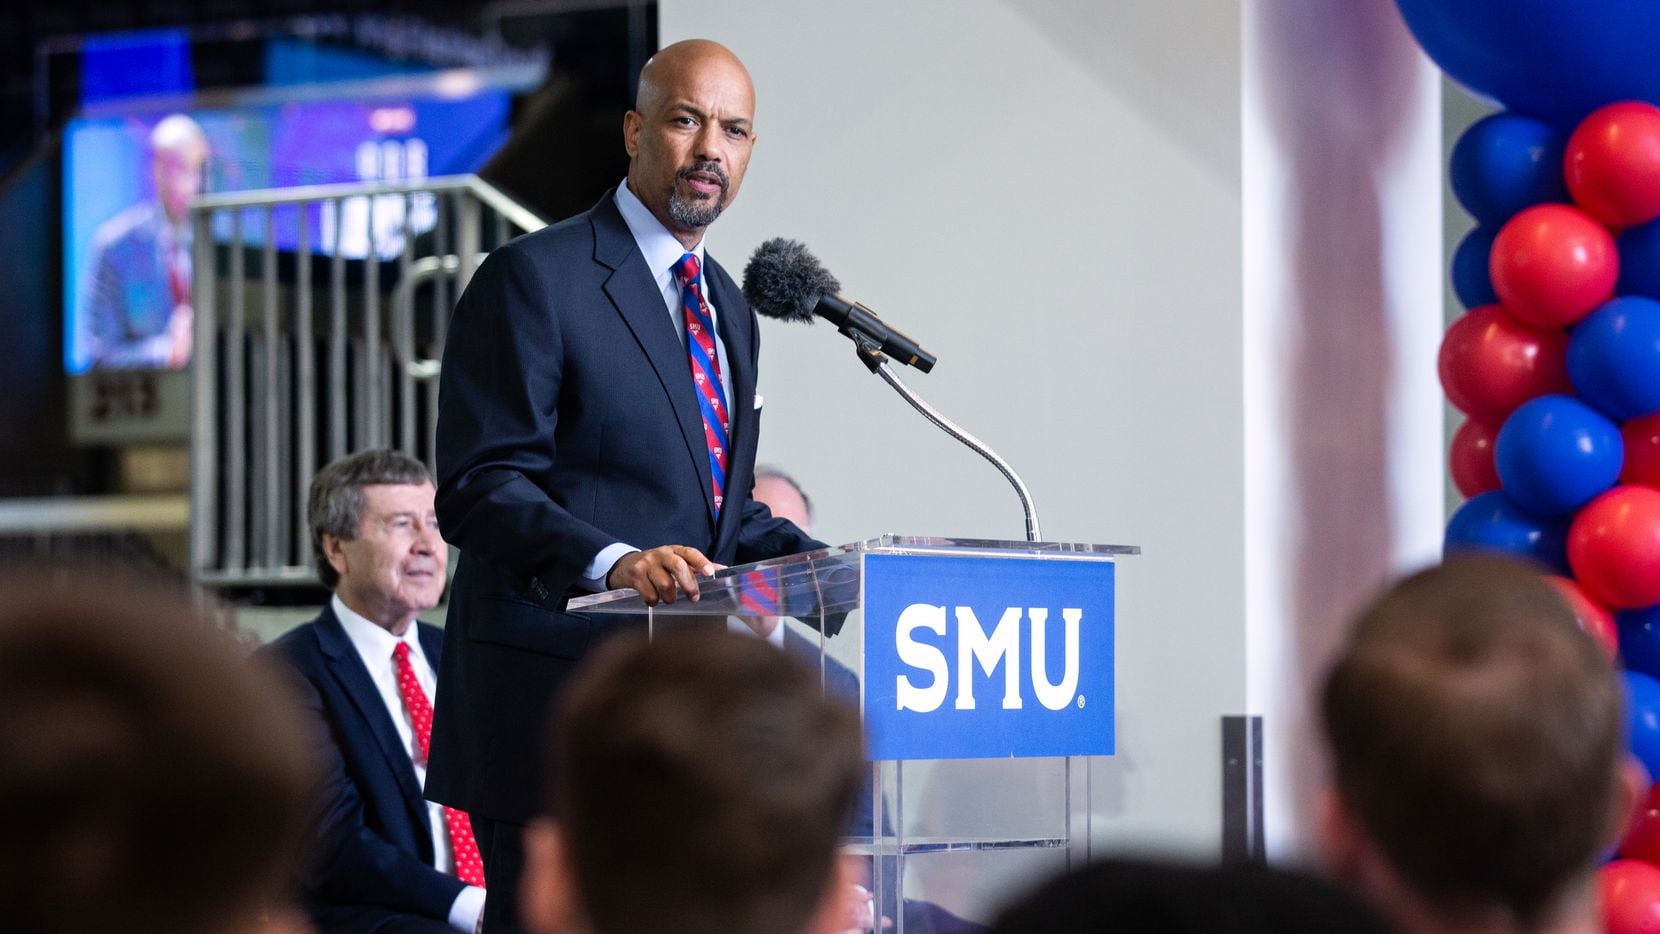 SMU’s new Head Men’s Basketball Coach Rob Lanier addresses the SMU men’s basketball players...